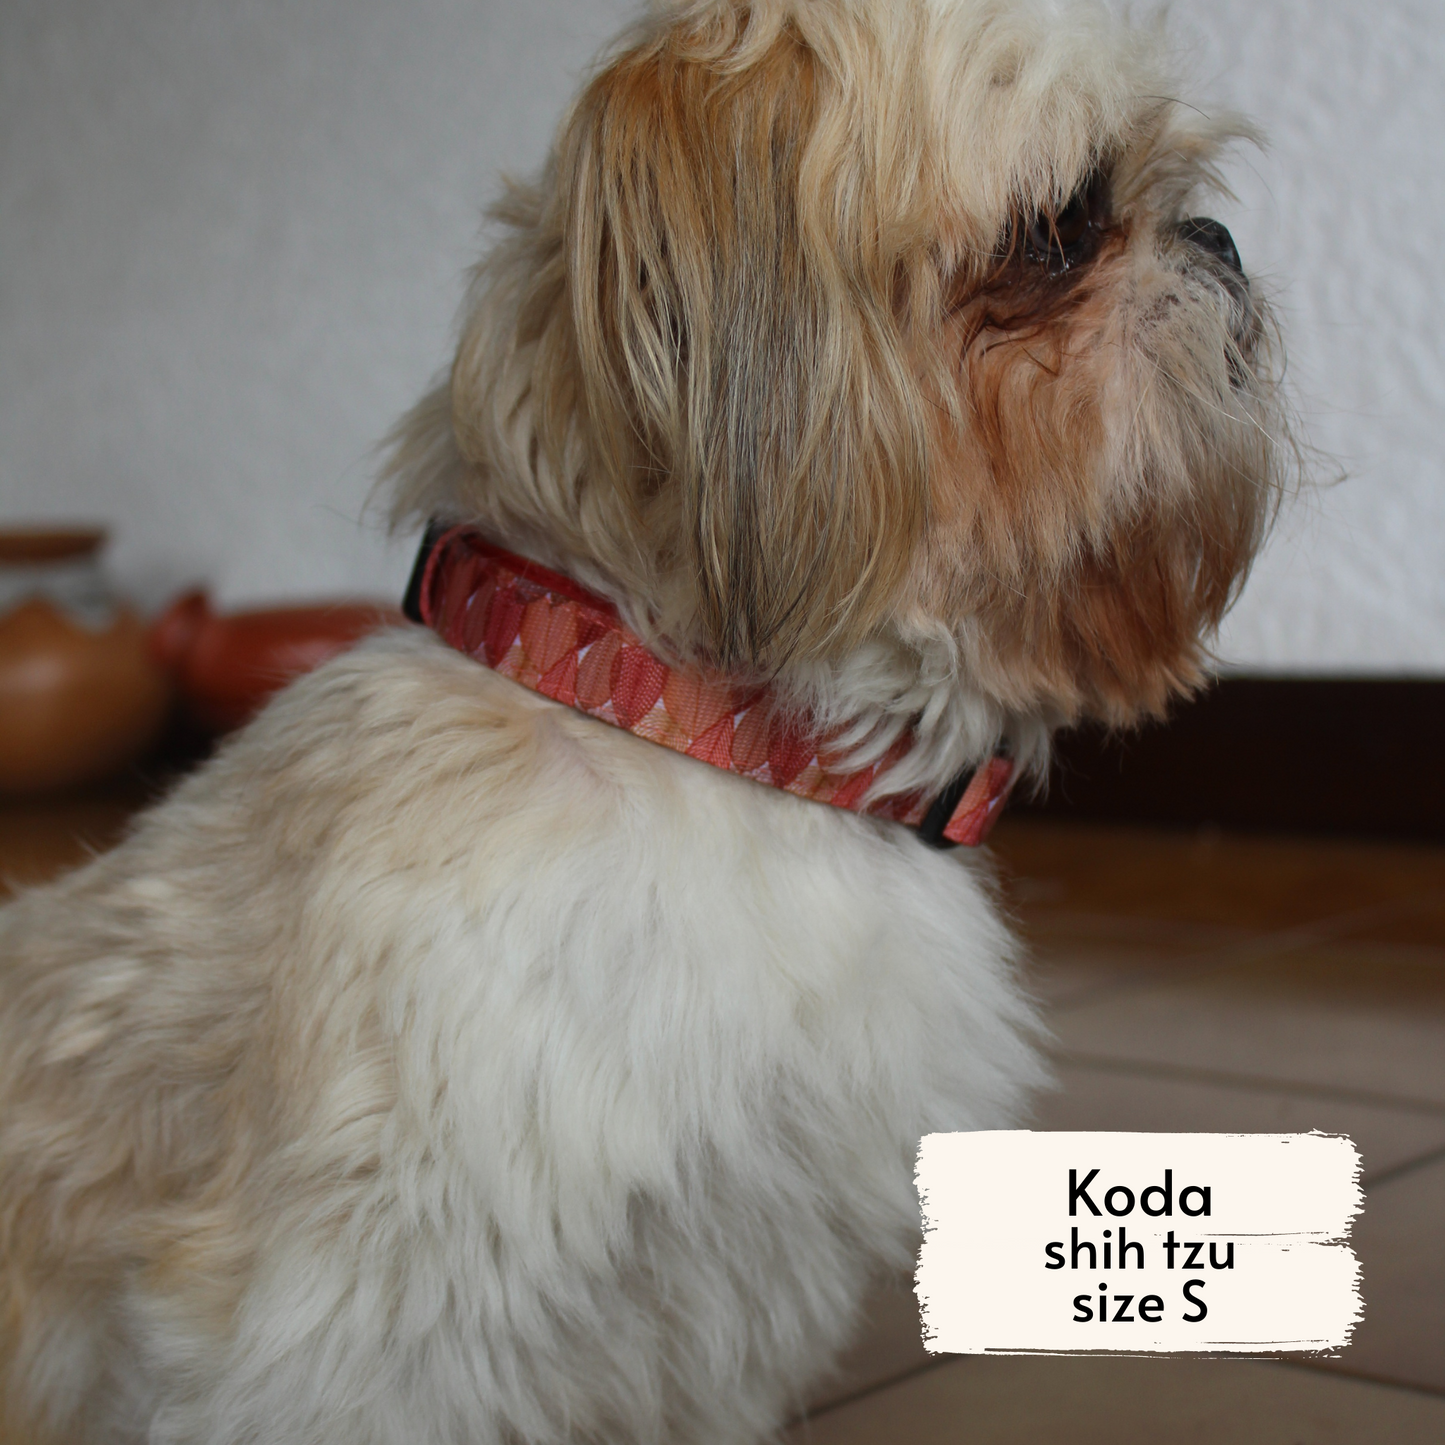 Pata Paw autumn crunch collar as seen on a small dog, Koda, a shih tzu.